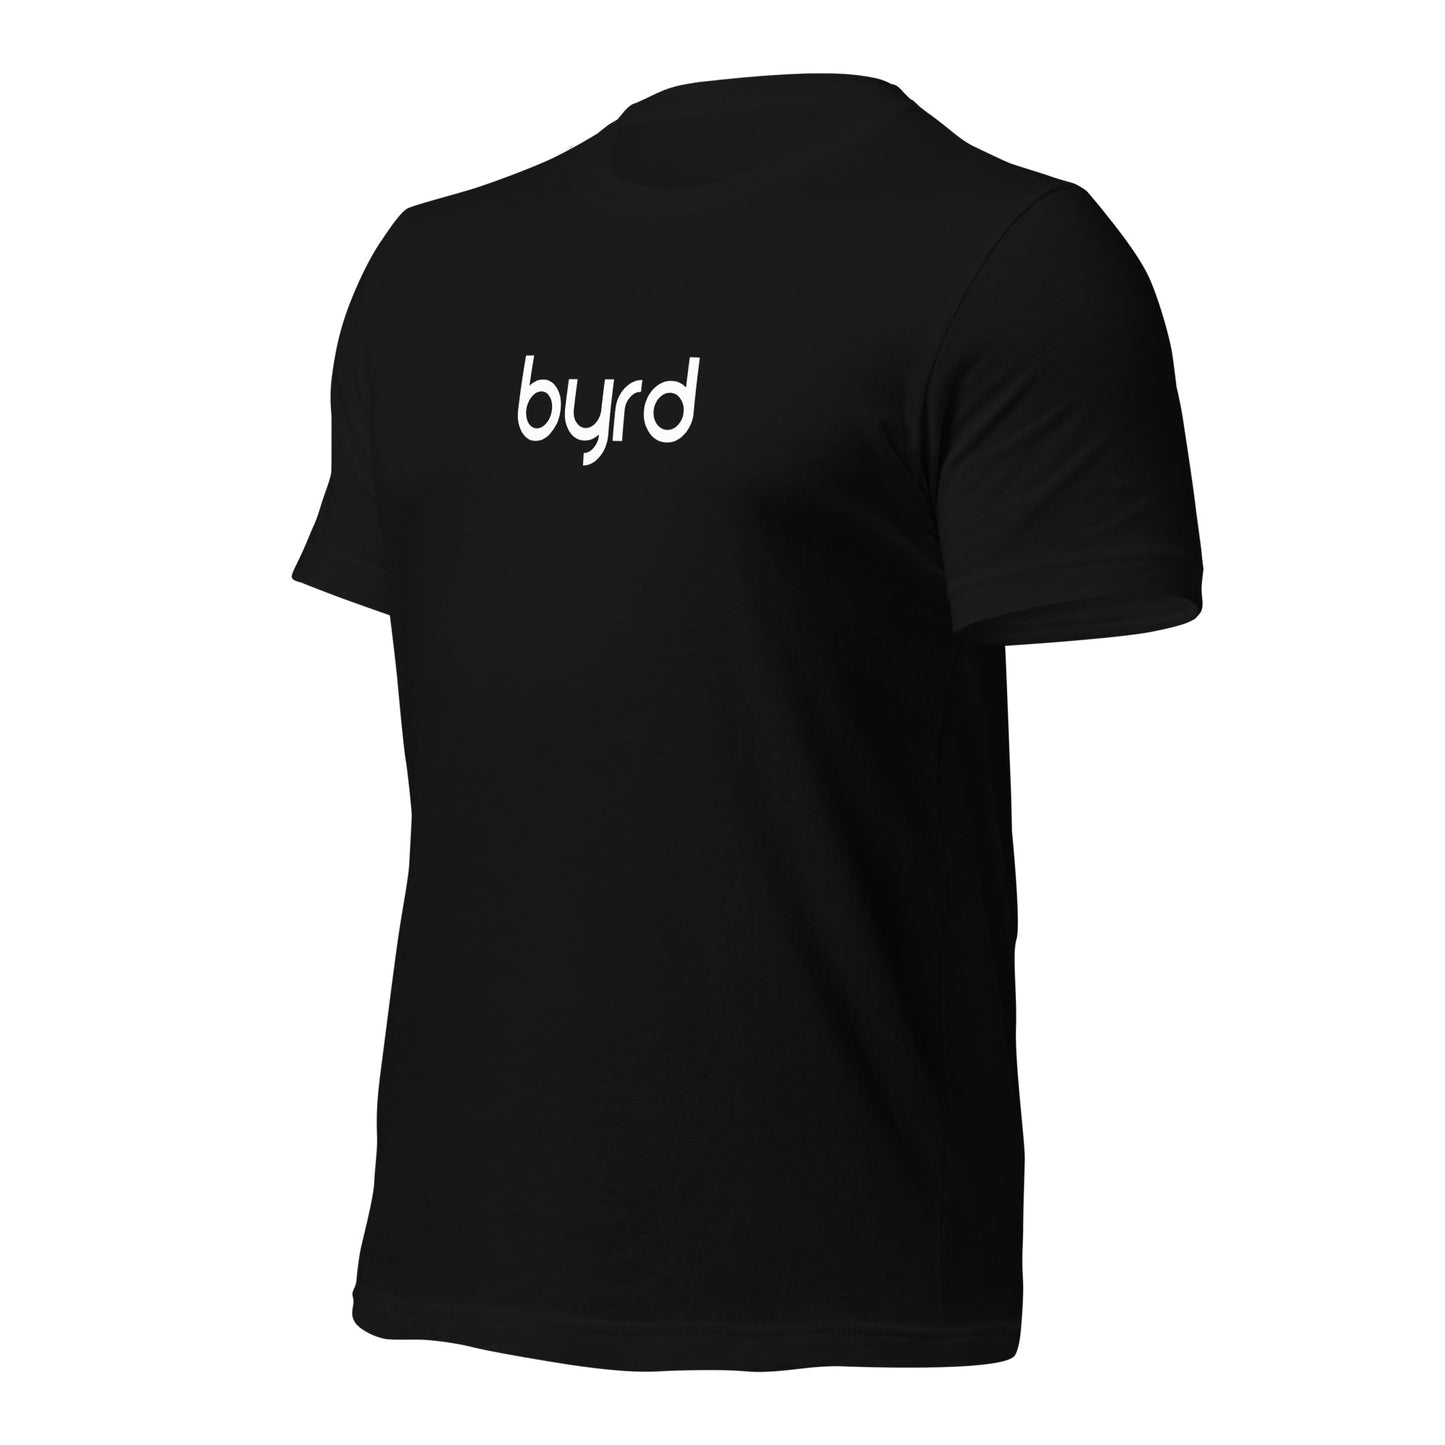 William Byrd - Band Tees Unisex t-shirt